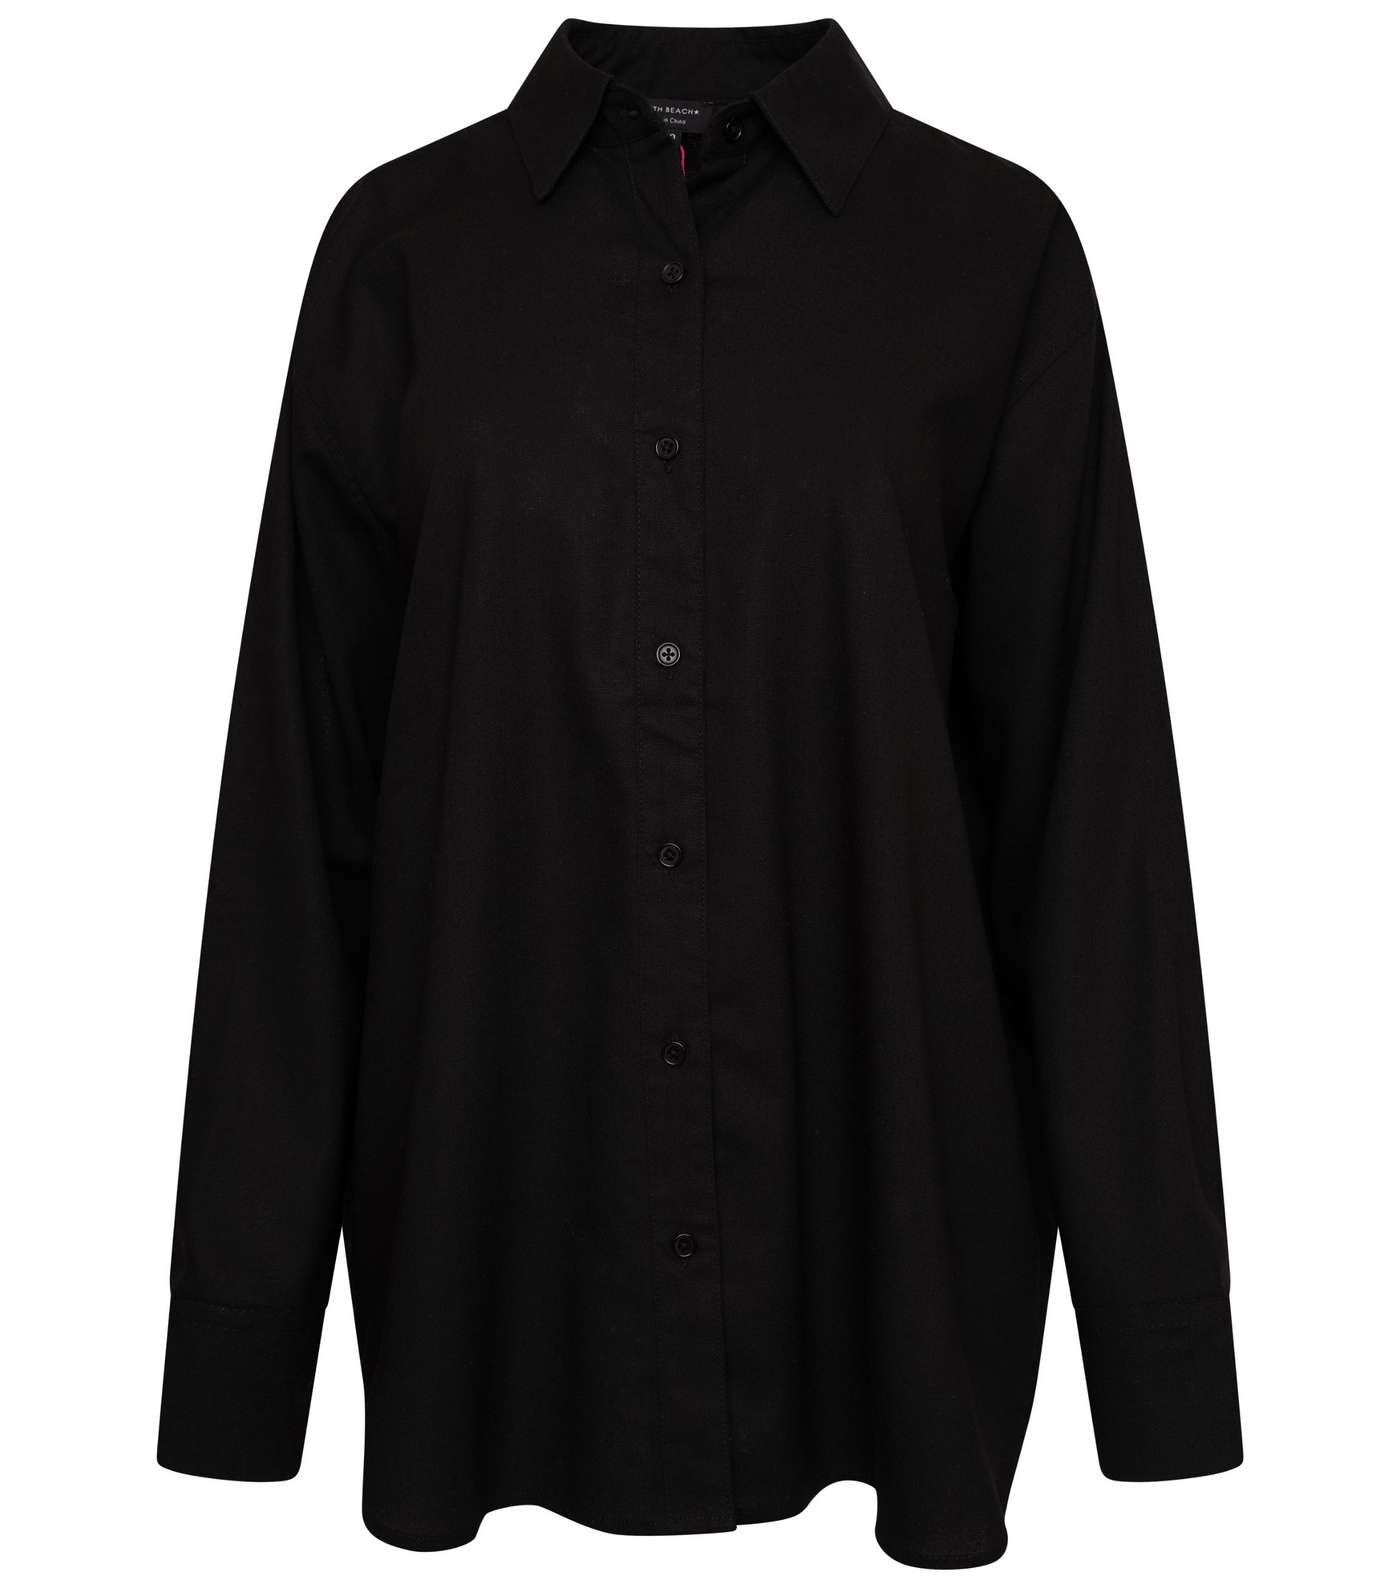 South Beach Black Linen-Look Oversized Shirt Image 5